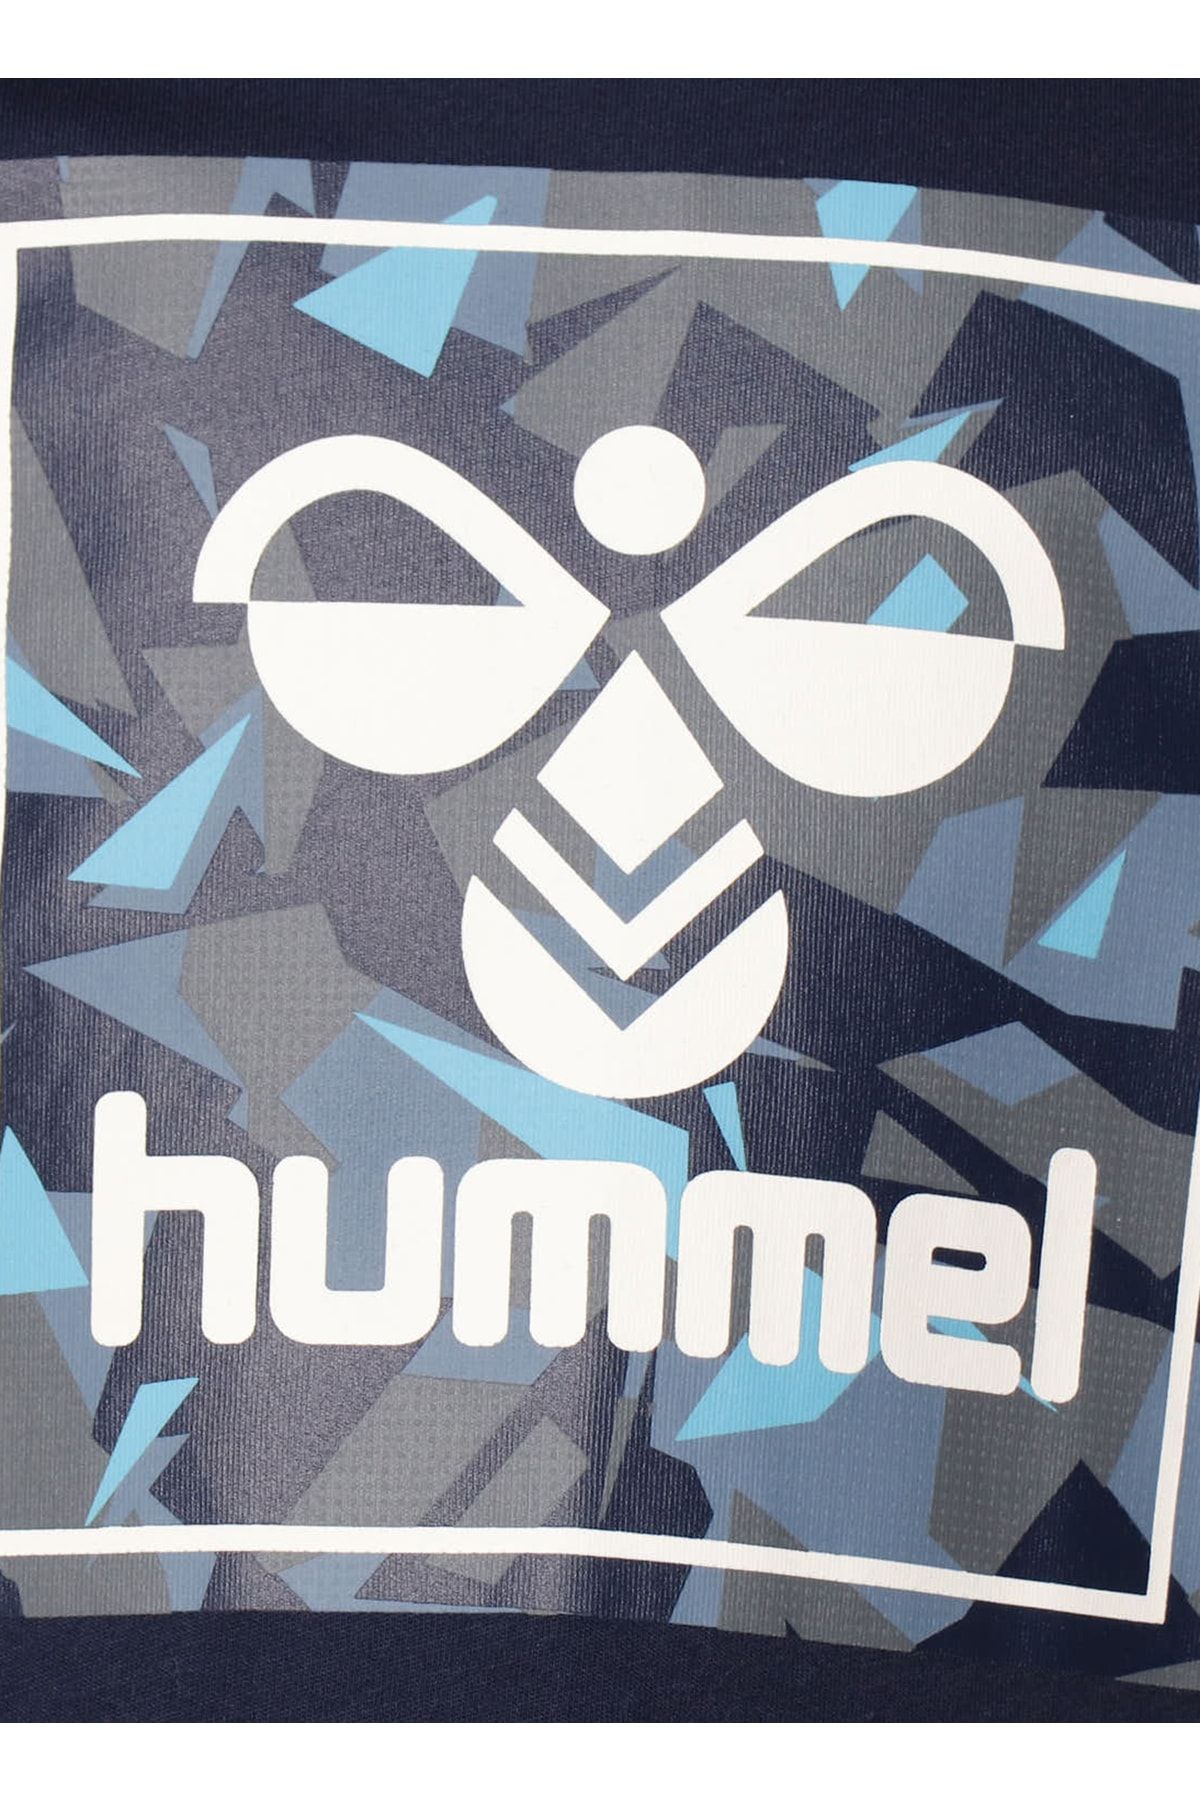 hummel تی شرت مرد آبی چاپی 911569-7480 HMLCOL S/S